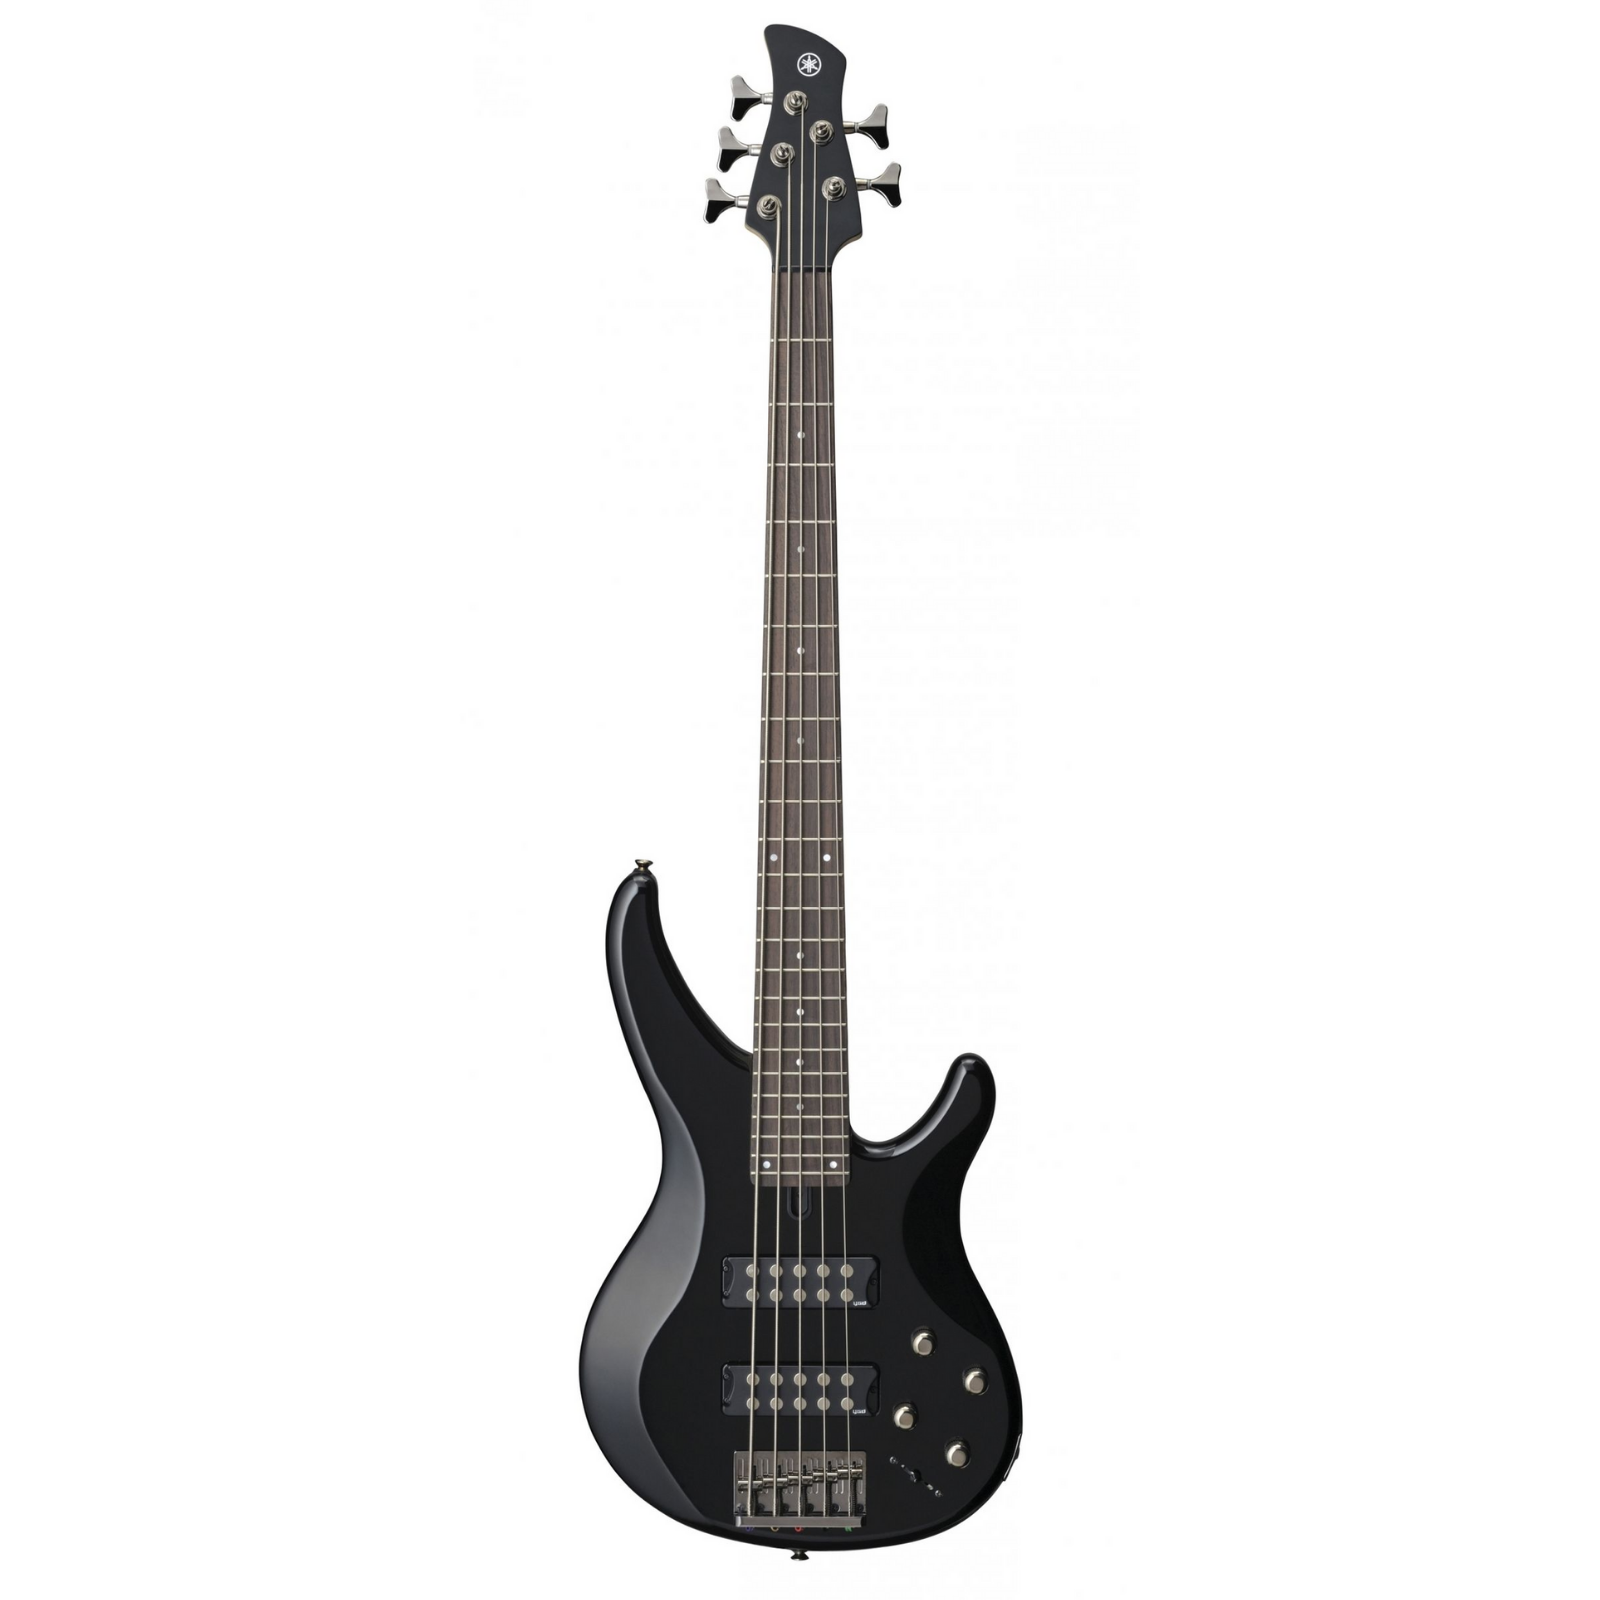 Yamaha TRBX305 5-string Electric Bass Guitar - Black (TRBX 305/TRBX-305), YAMAHA, BASS GUITAR, yamaha-bass-guitar-ymhgtrbx305-bk, ZOSO MUSIC SDN BHD